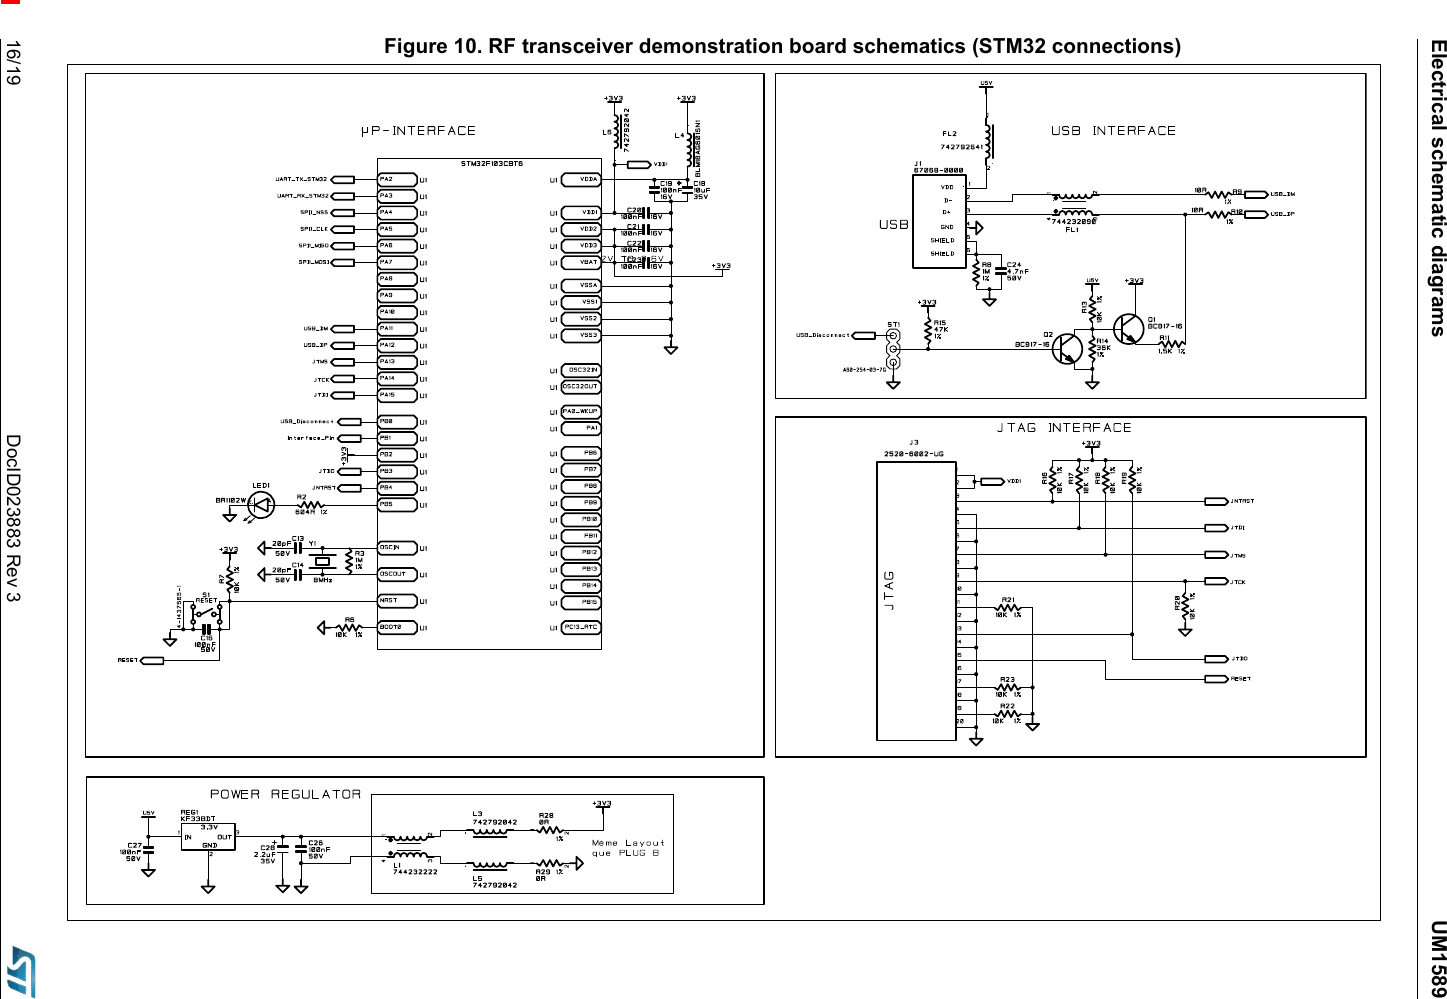 Electrical schematic diagrams UM158916/19 DocID023883 Rev 3Figure 10. RF transceiver demonstration board schematics (STM32 connections)